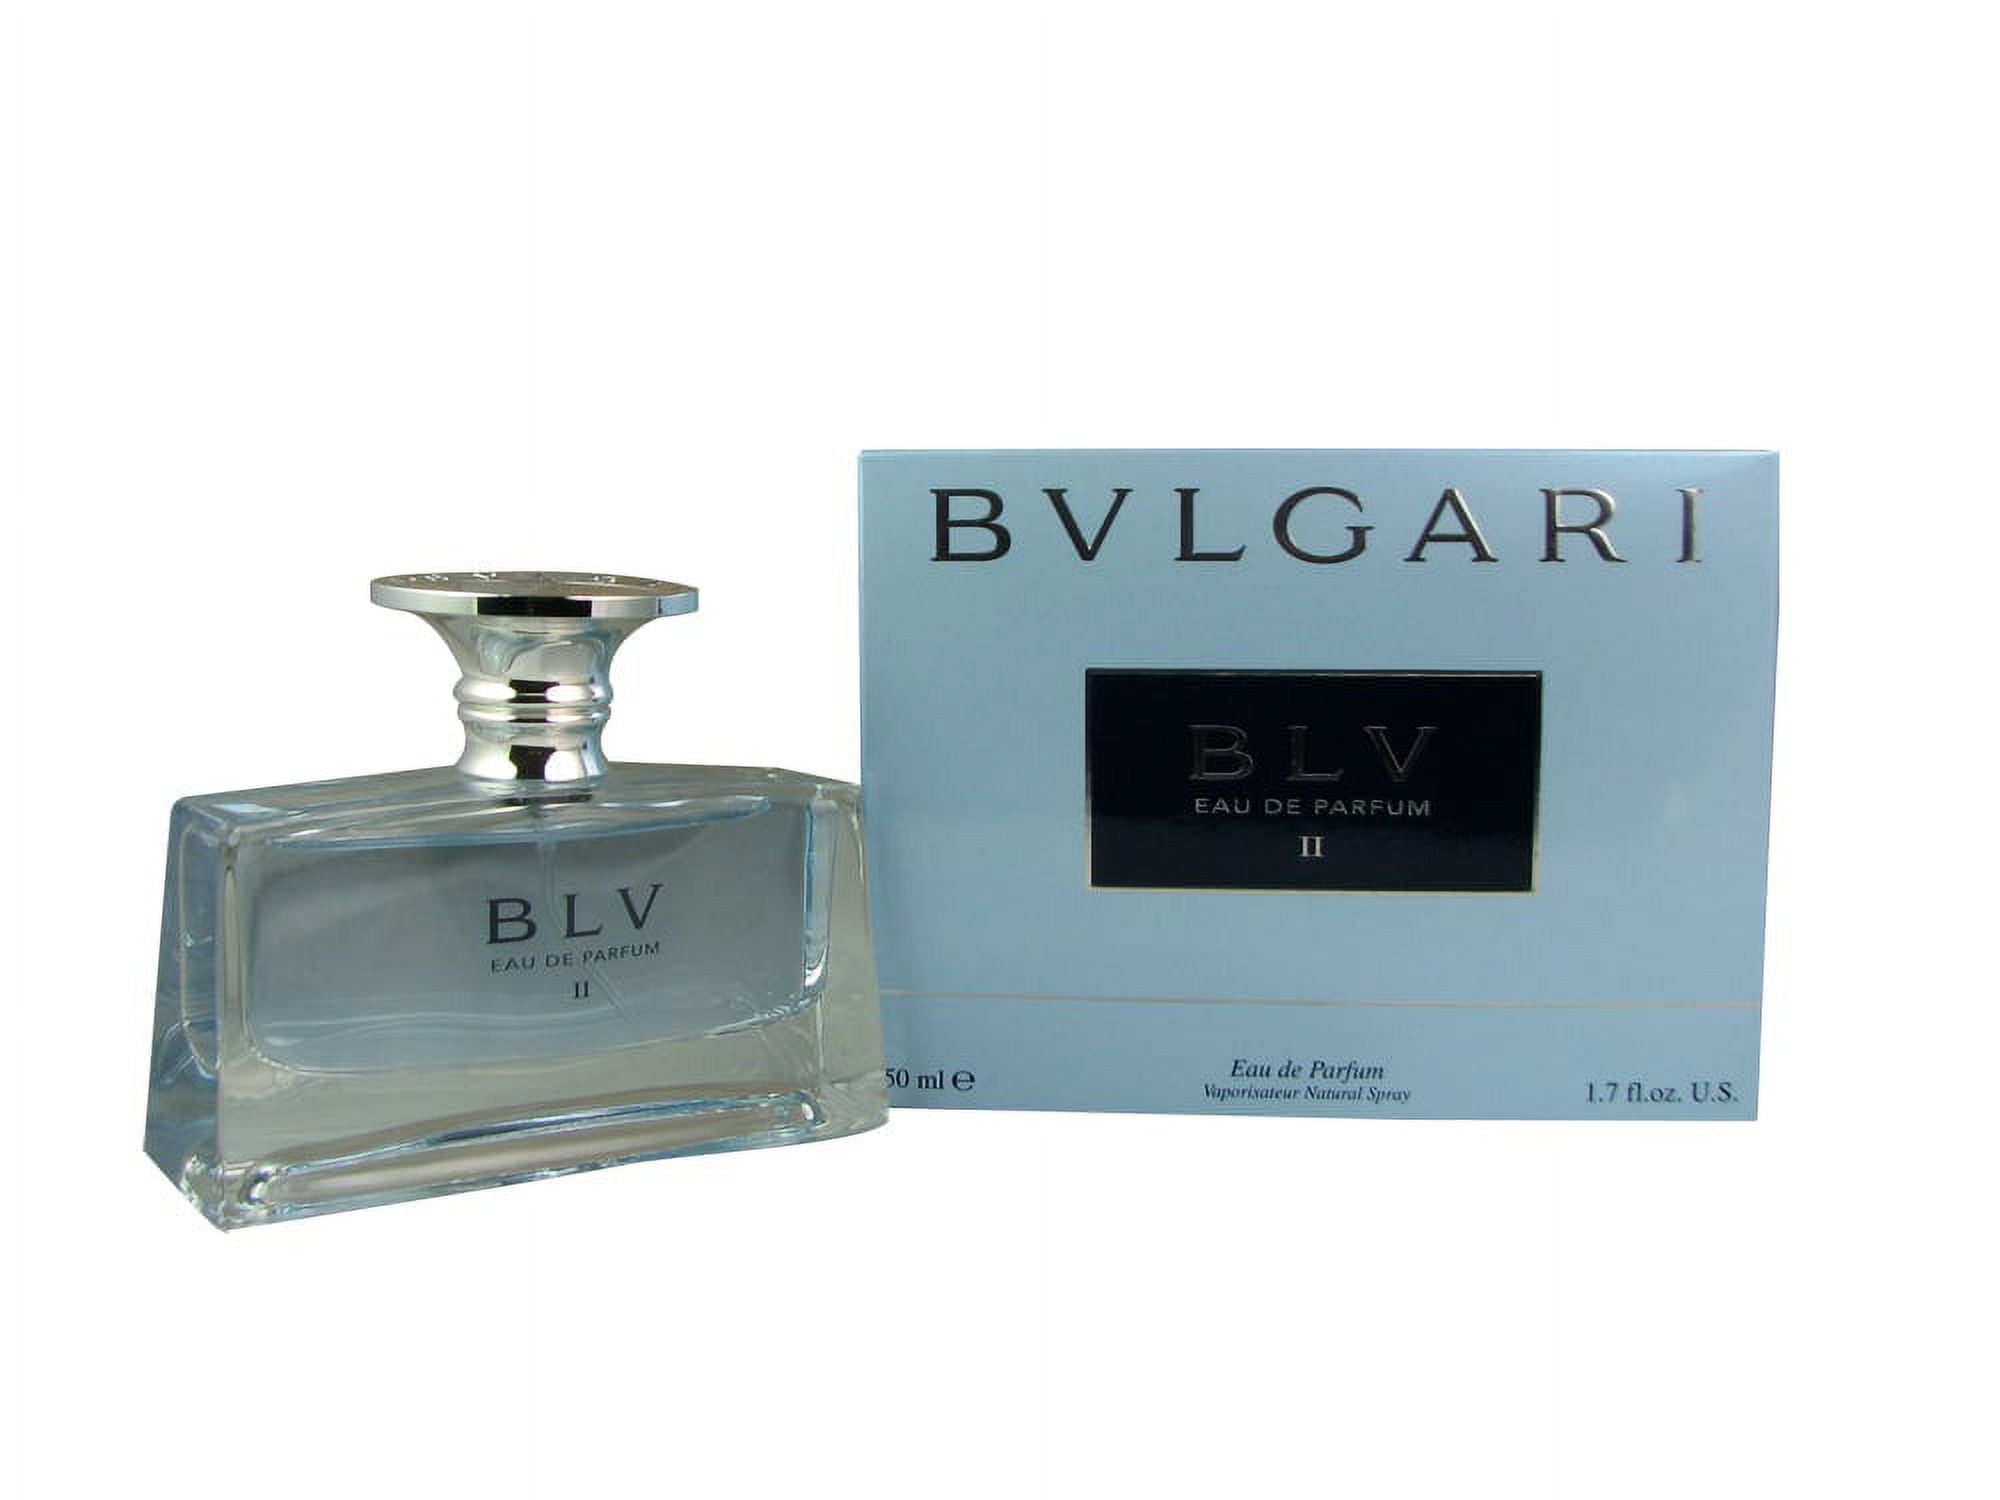 Bvlgari Blv II Eau De Parfum Spray 30ml/1oz buy in United States with free  shipping CosmoStore